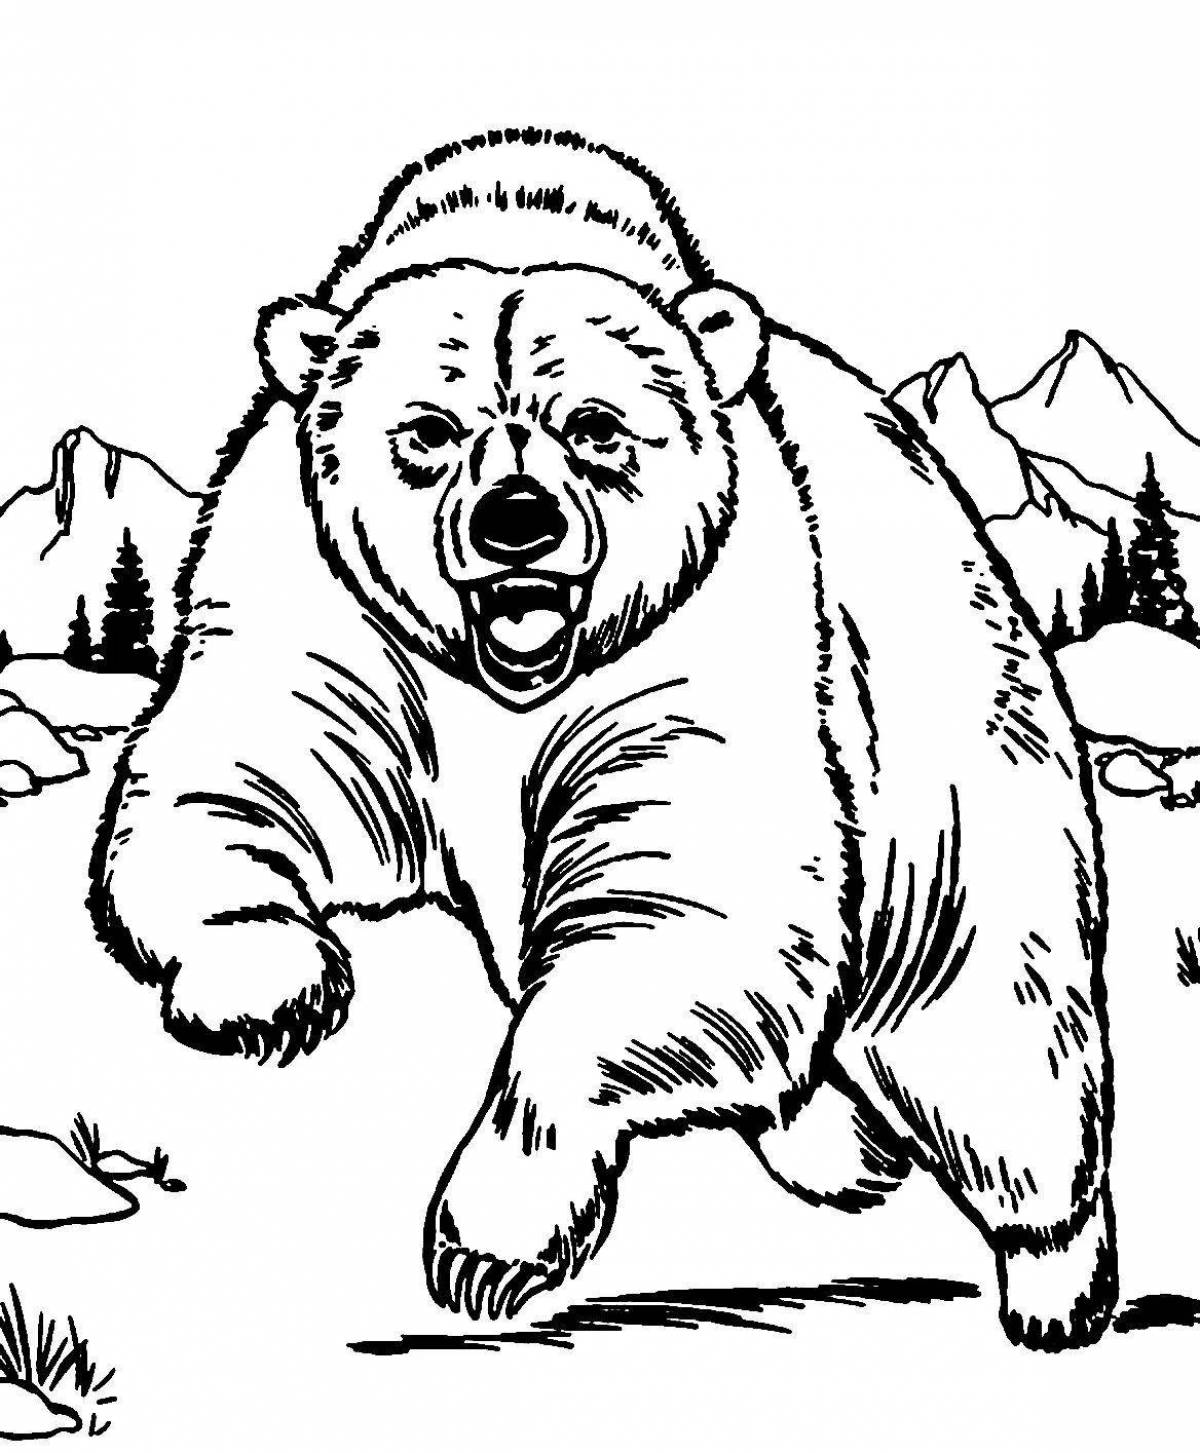 Coloring page vengeful angry bear